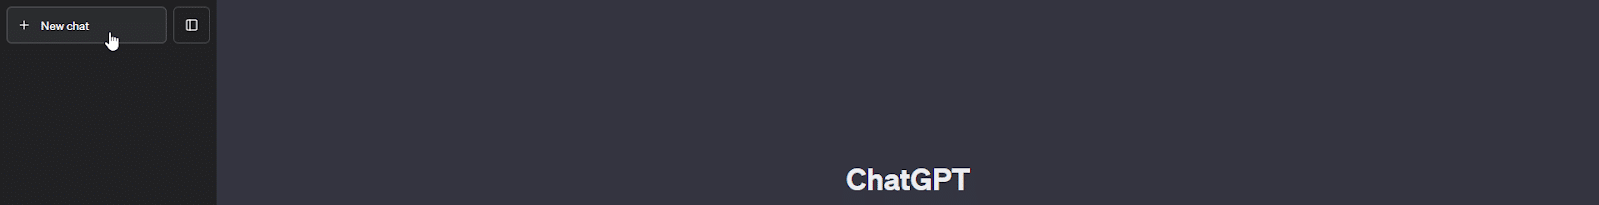 ChatGPT start new chat